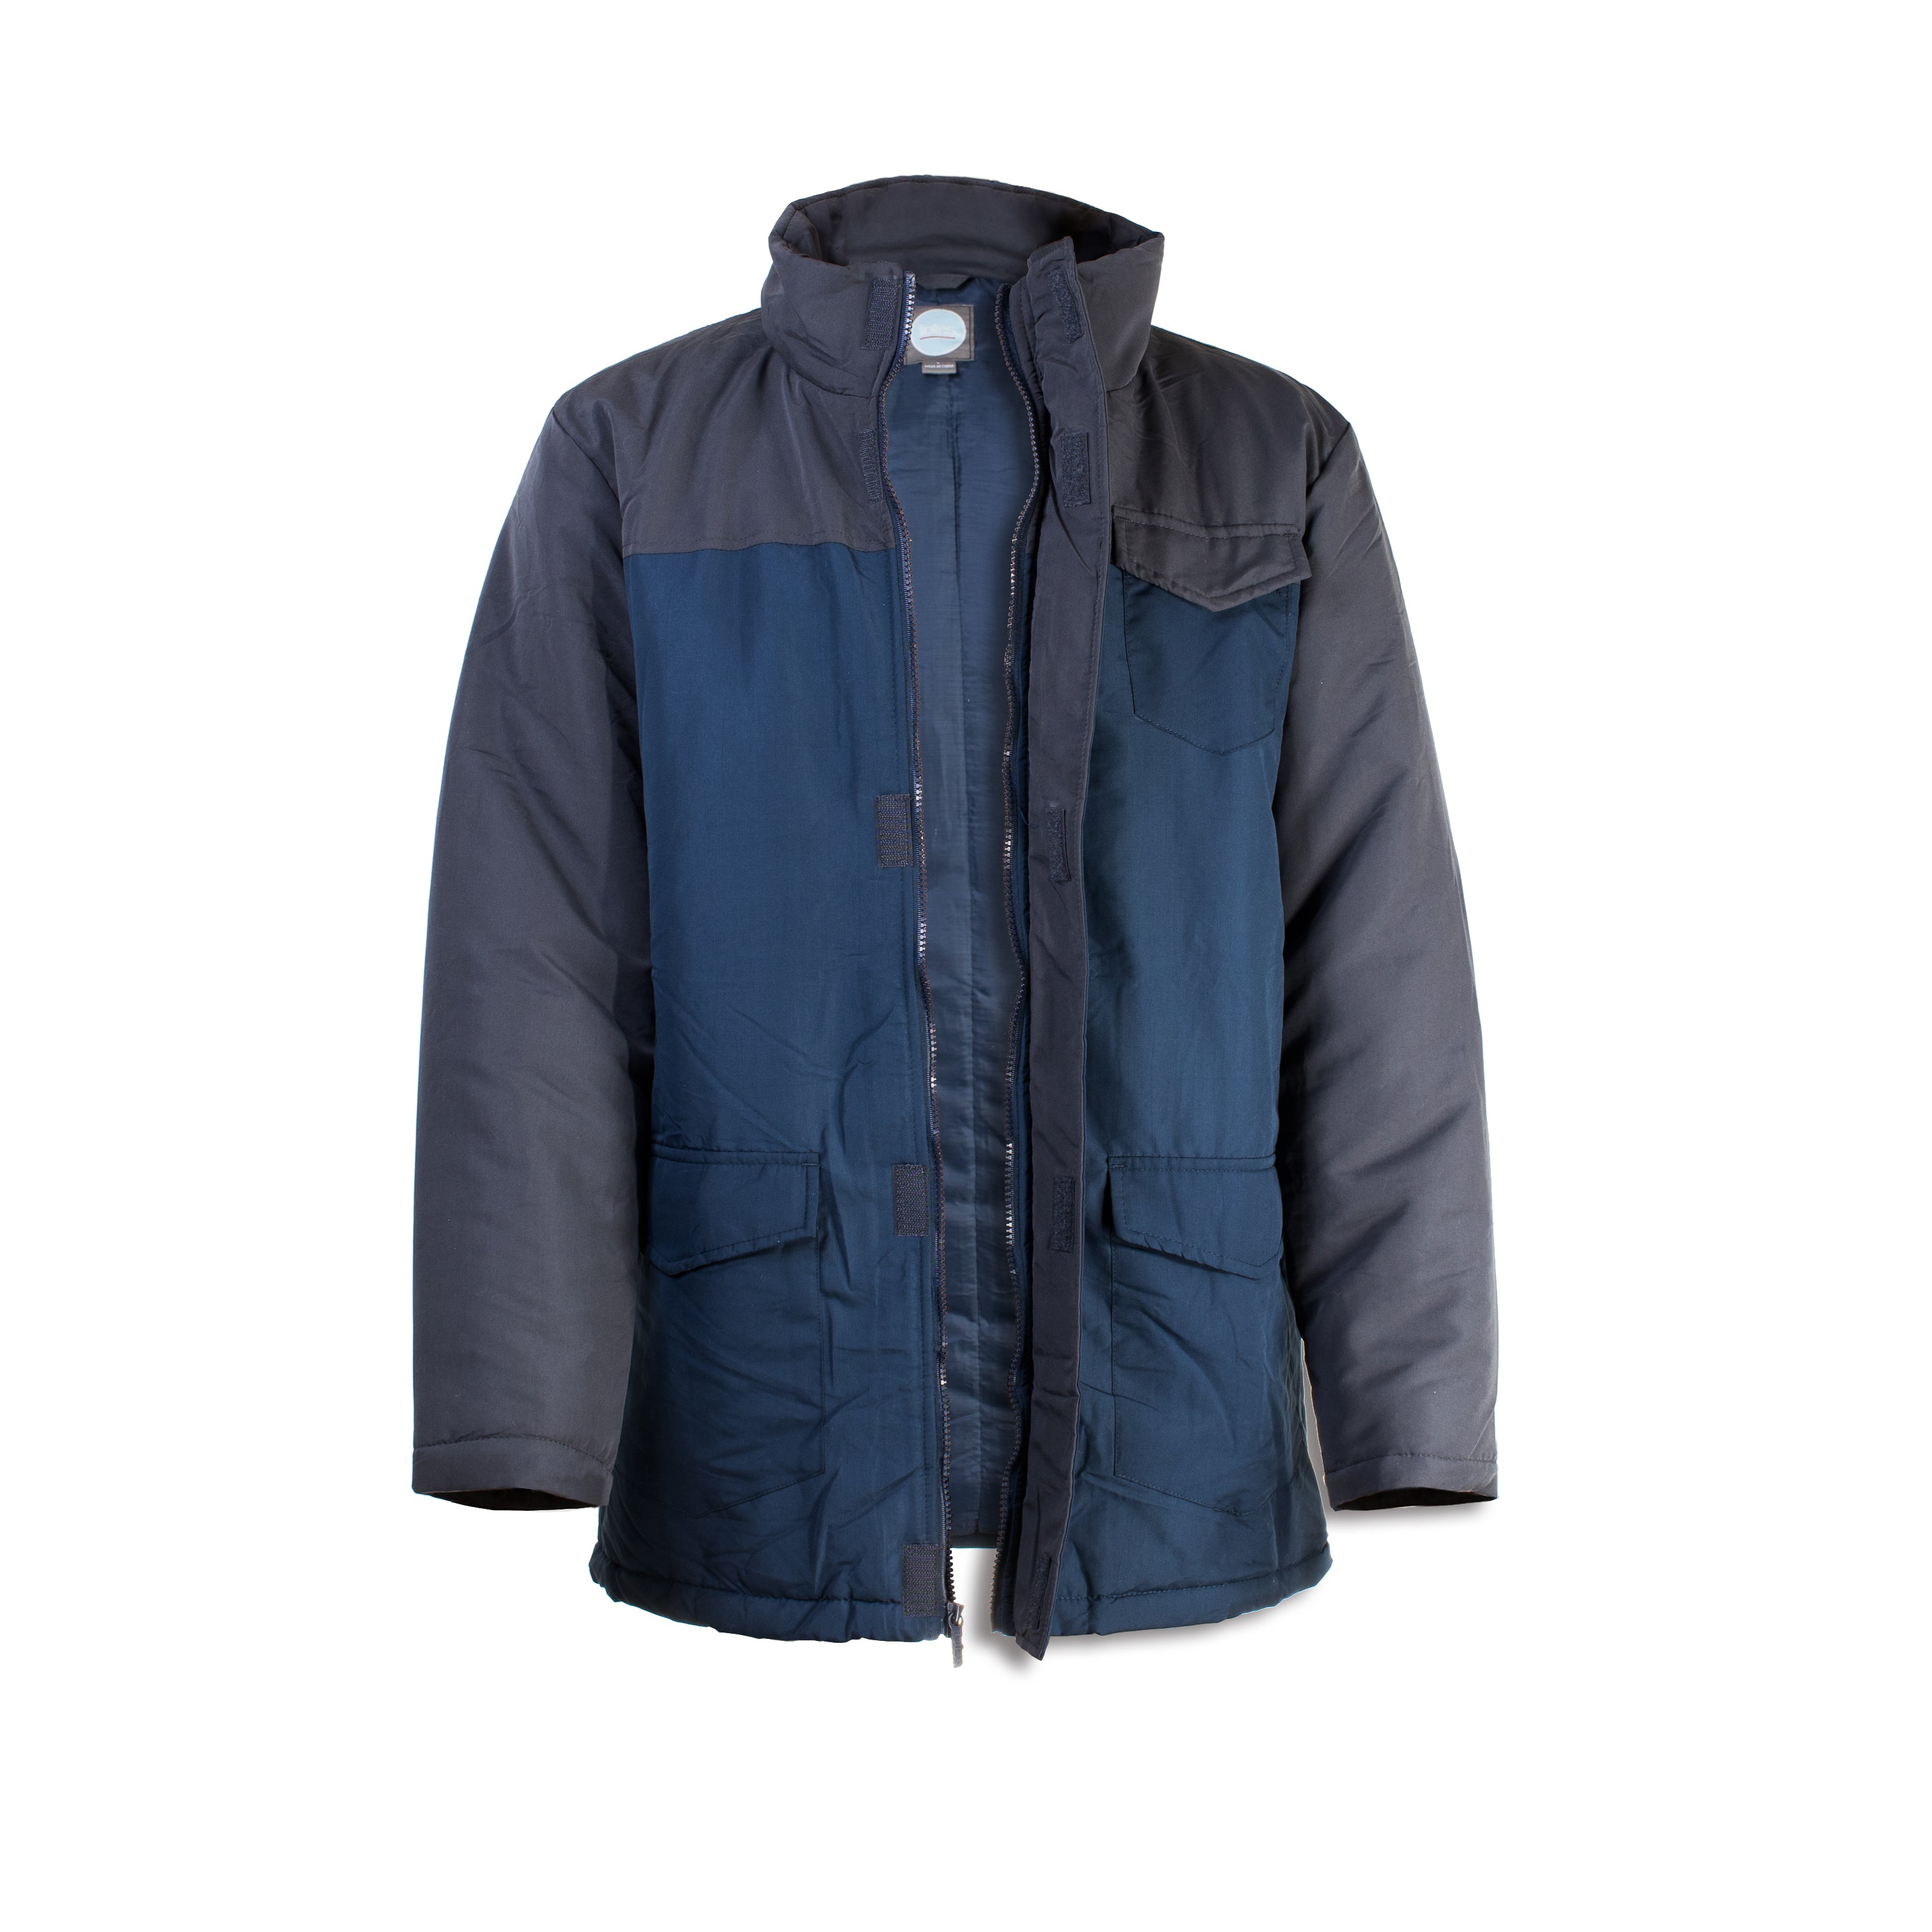 Men's Winter Coats in Assorted Sizes - Bulk Case of 24 Jackets